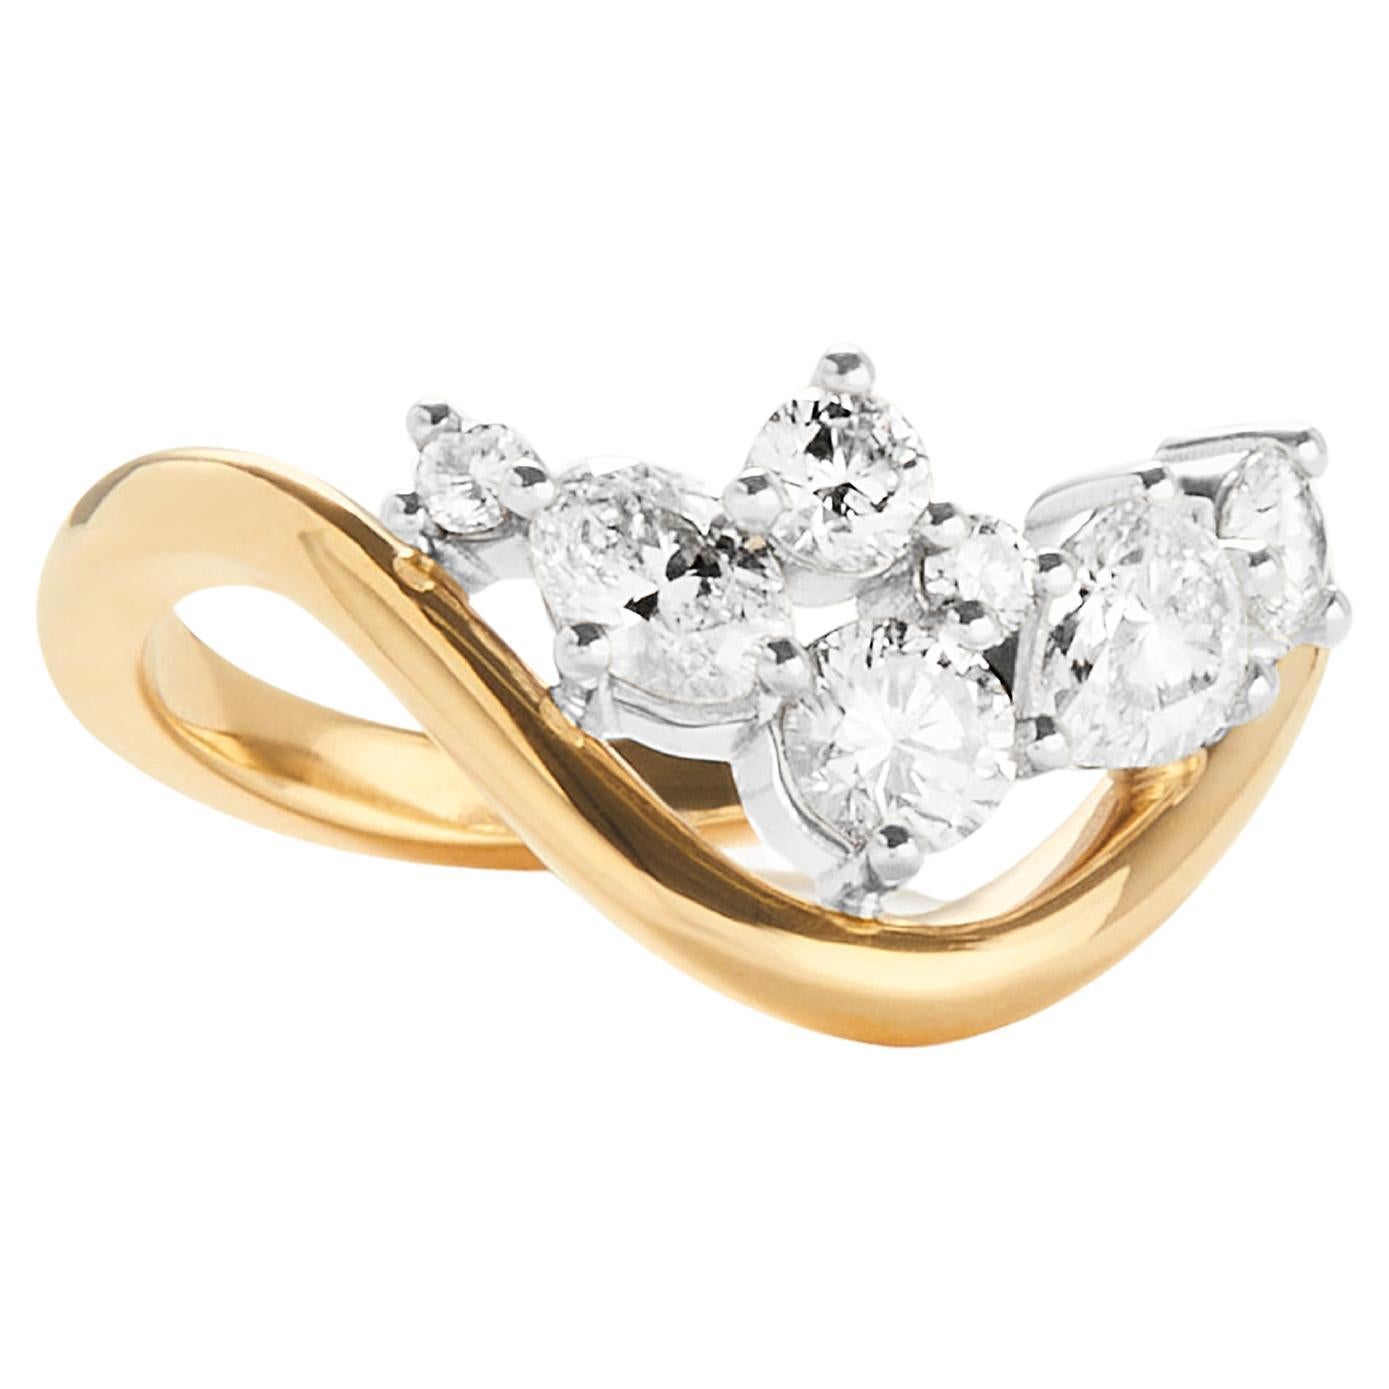 For Sale:  Rosario Navia Mara Medium Curved Ring I in 18K Gold, Platinum, and Diamonds